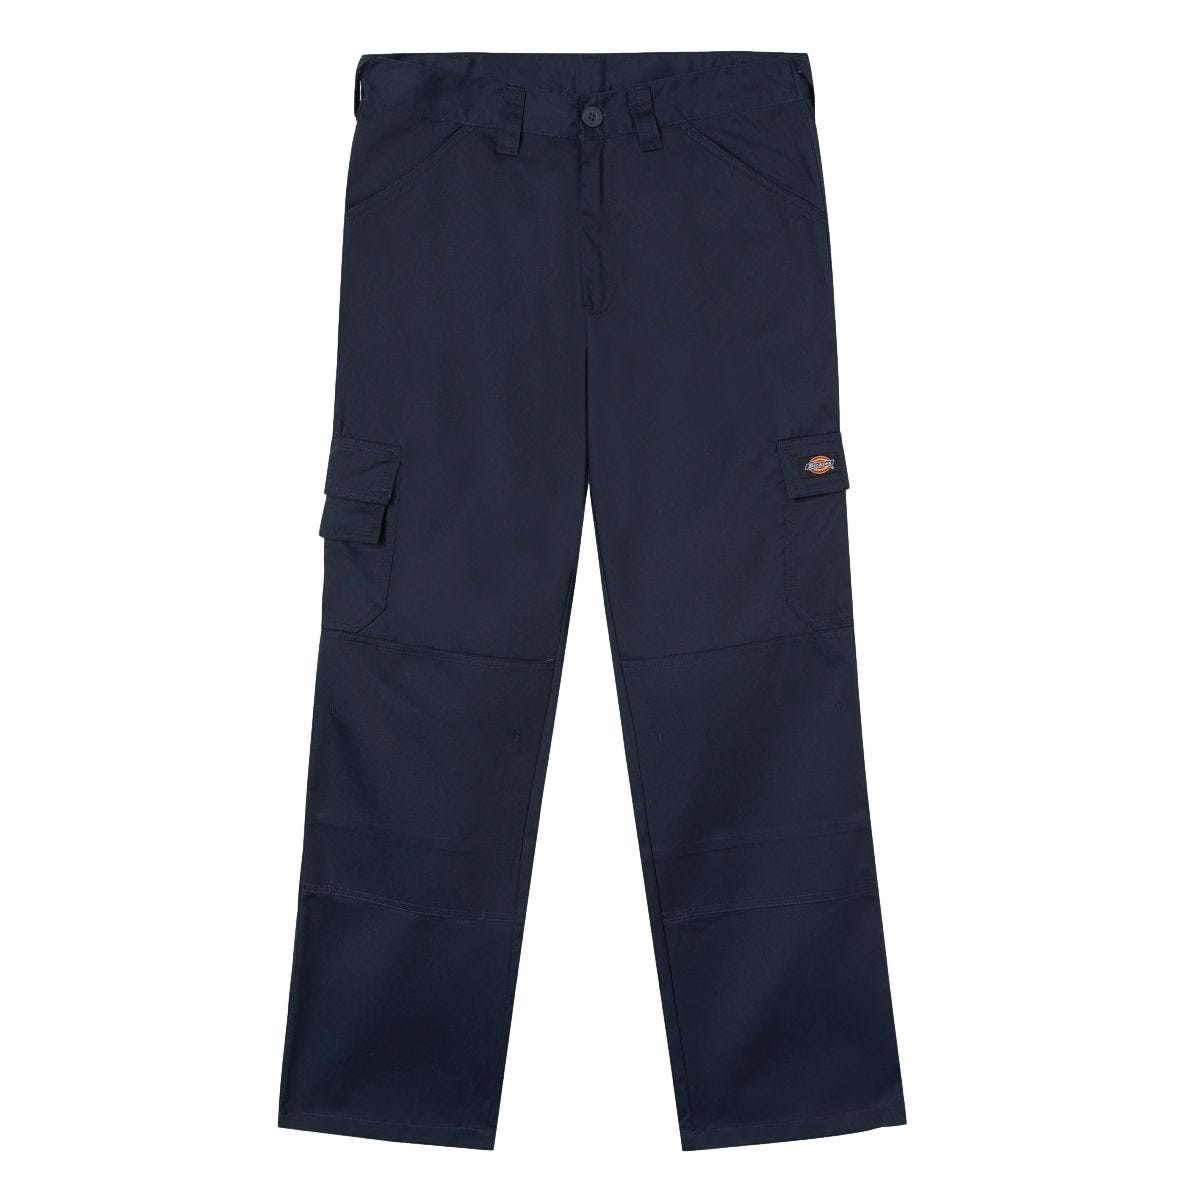 Pantalon Everyday Bleu marine - Dickies - Taille 48 0